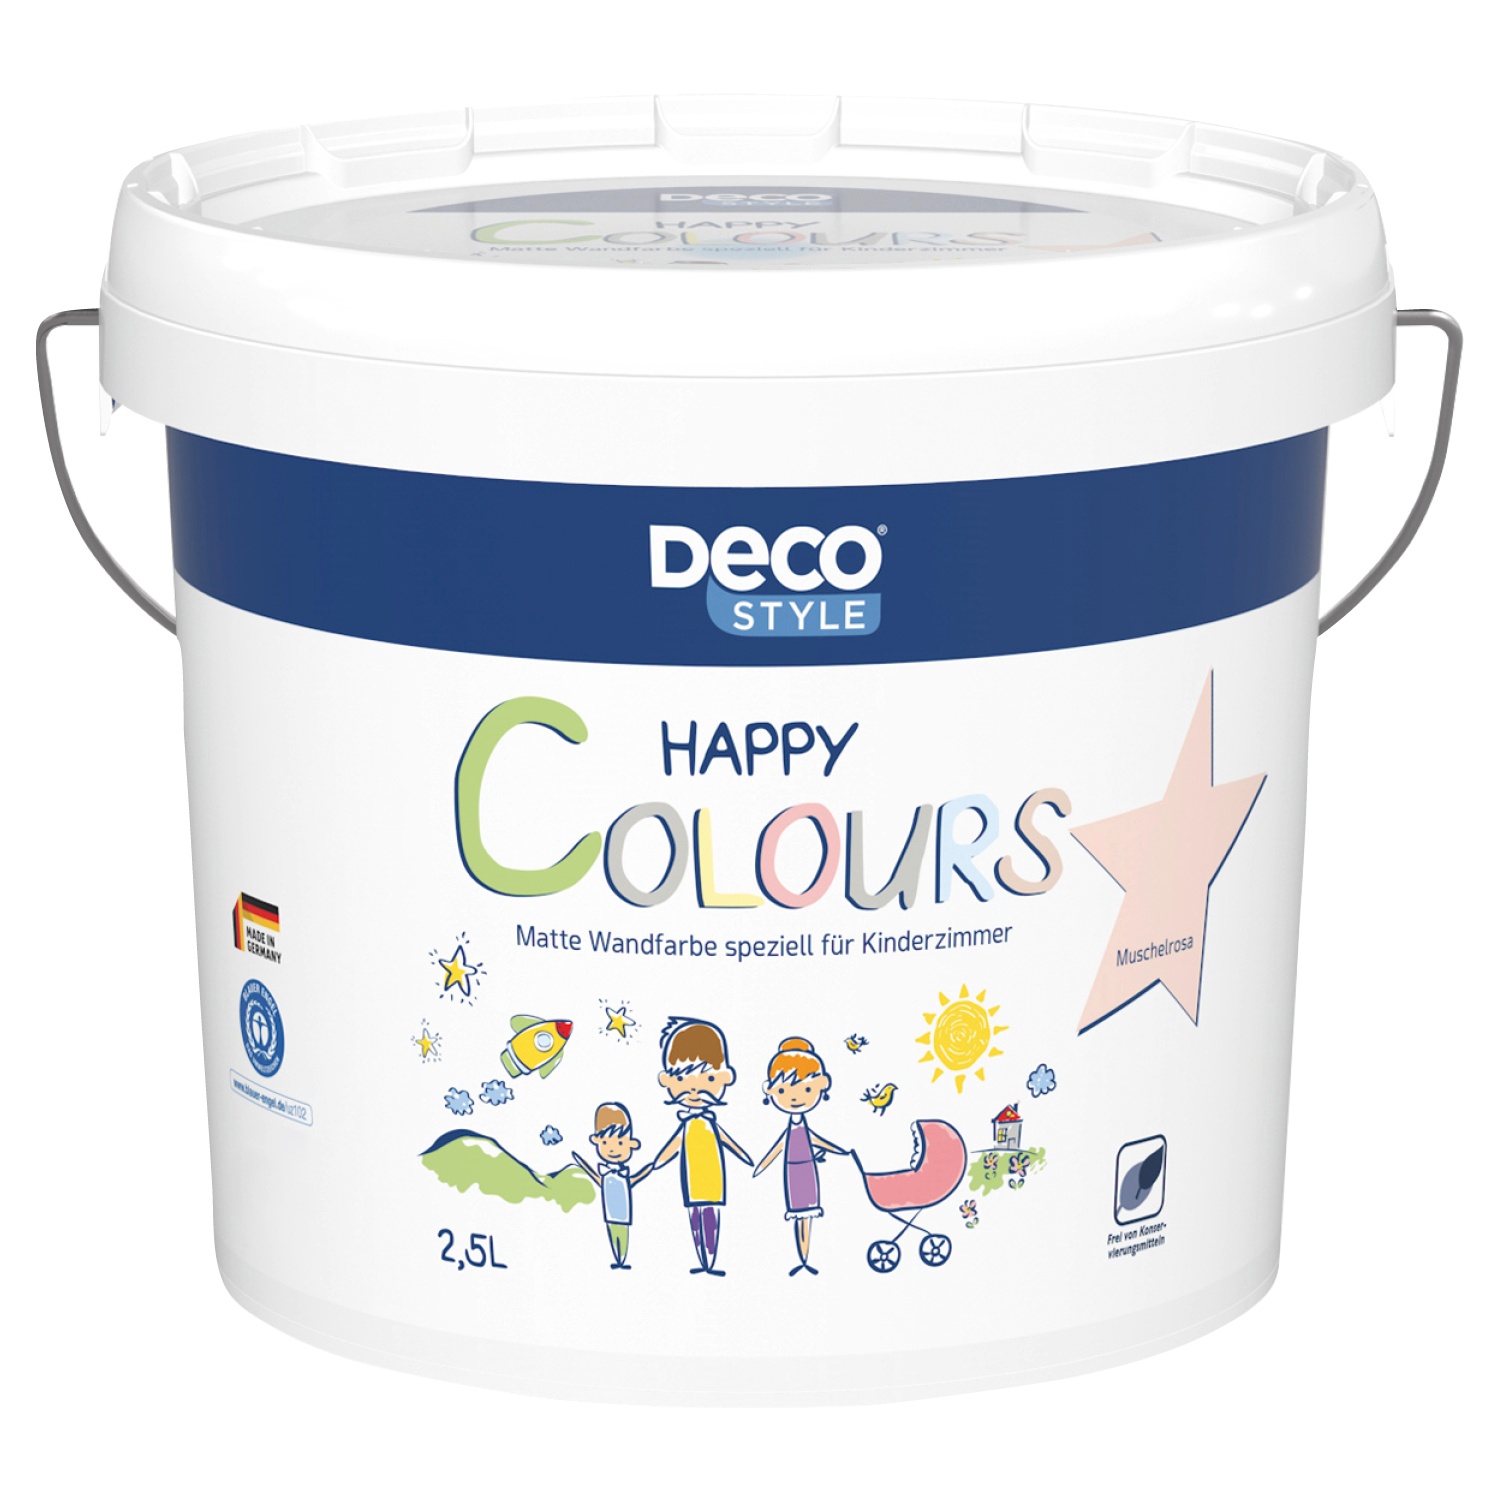 DECO STYLE® Wandfarbe Happy Colours im 2,5l